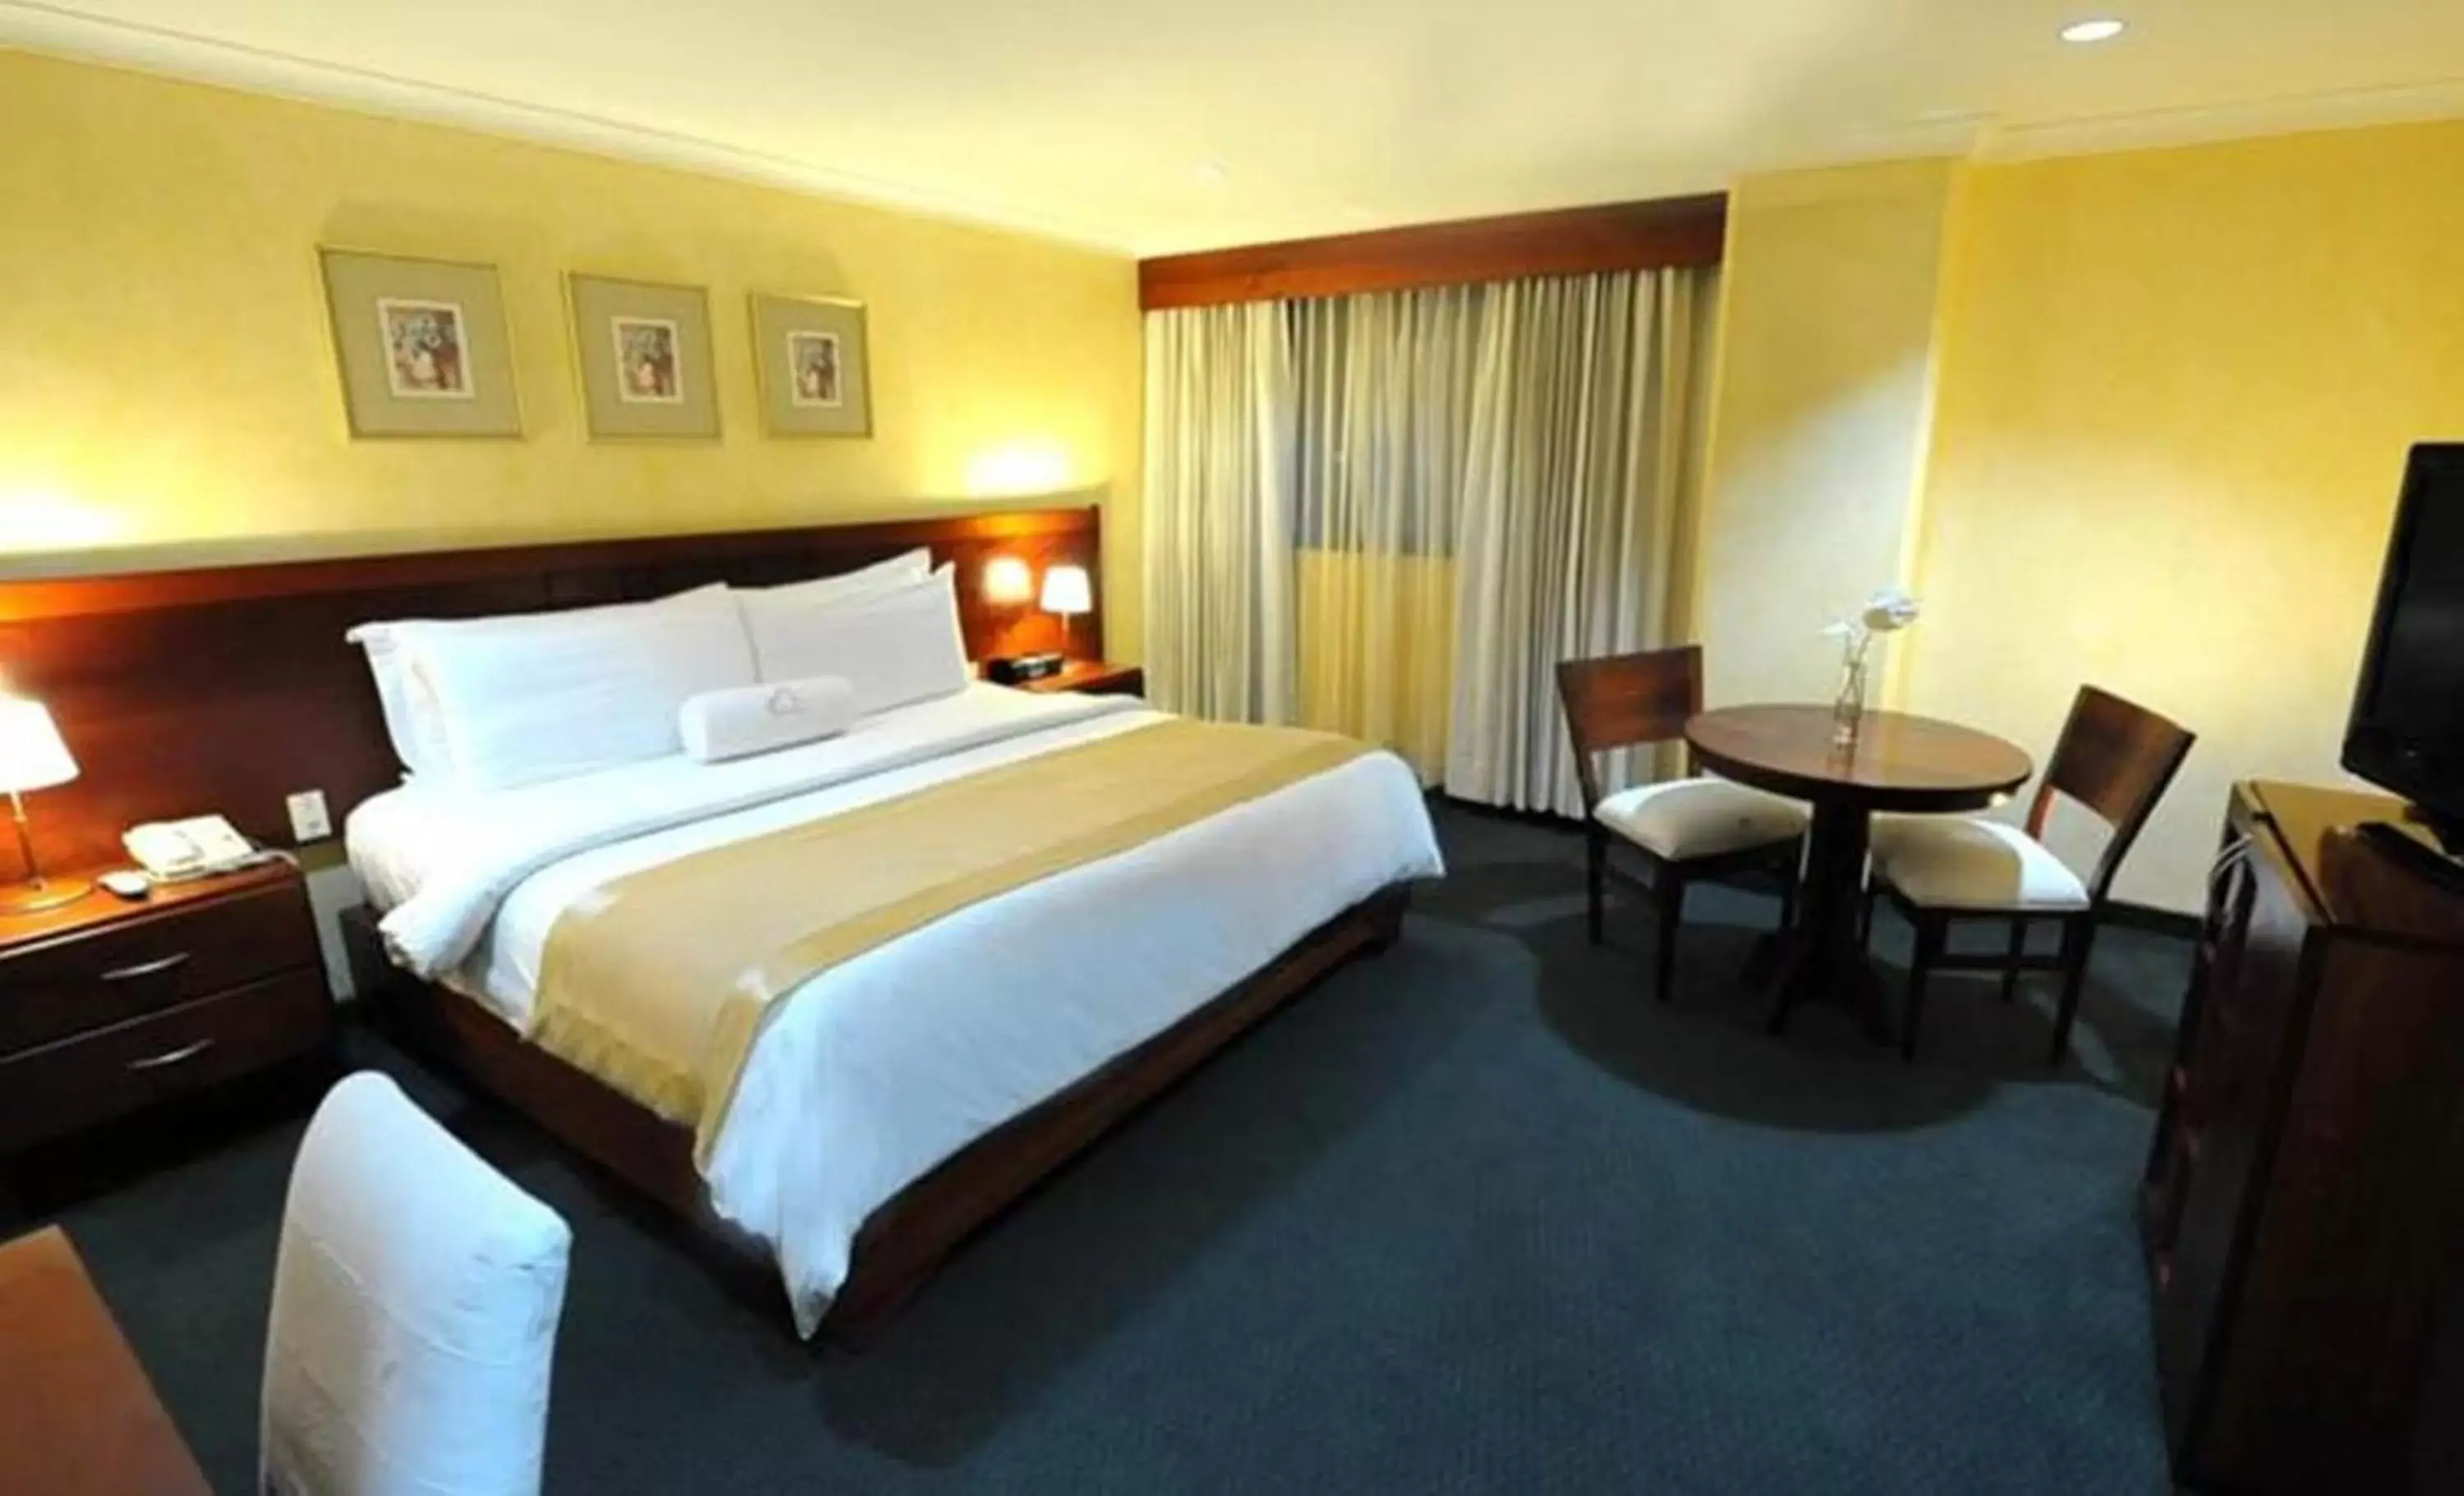 Bed, Room Photo in Hodelpa Gran Almirante